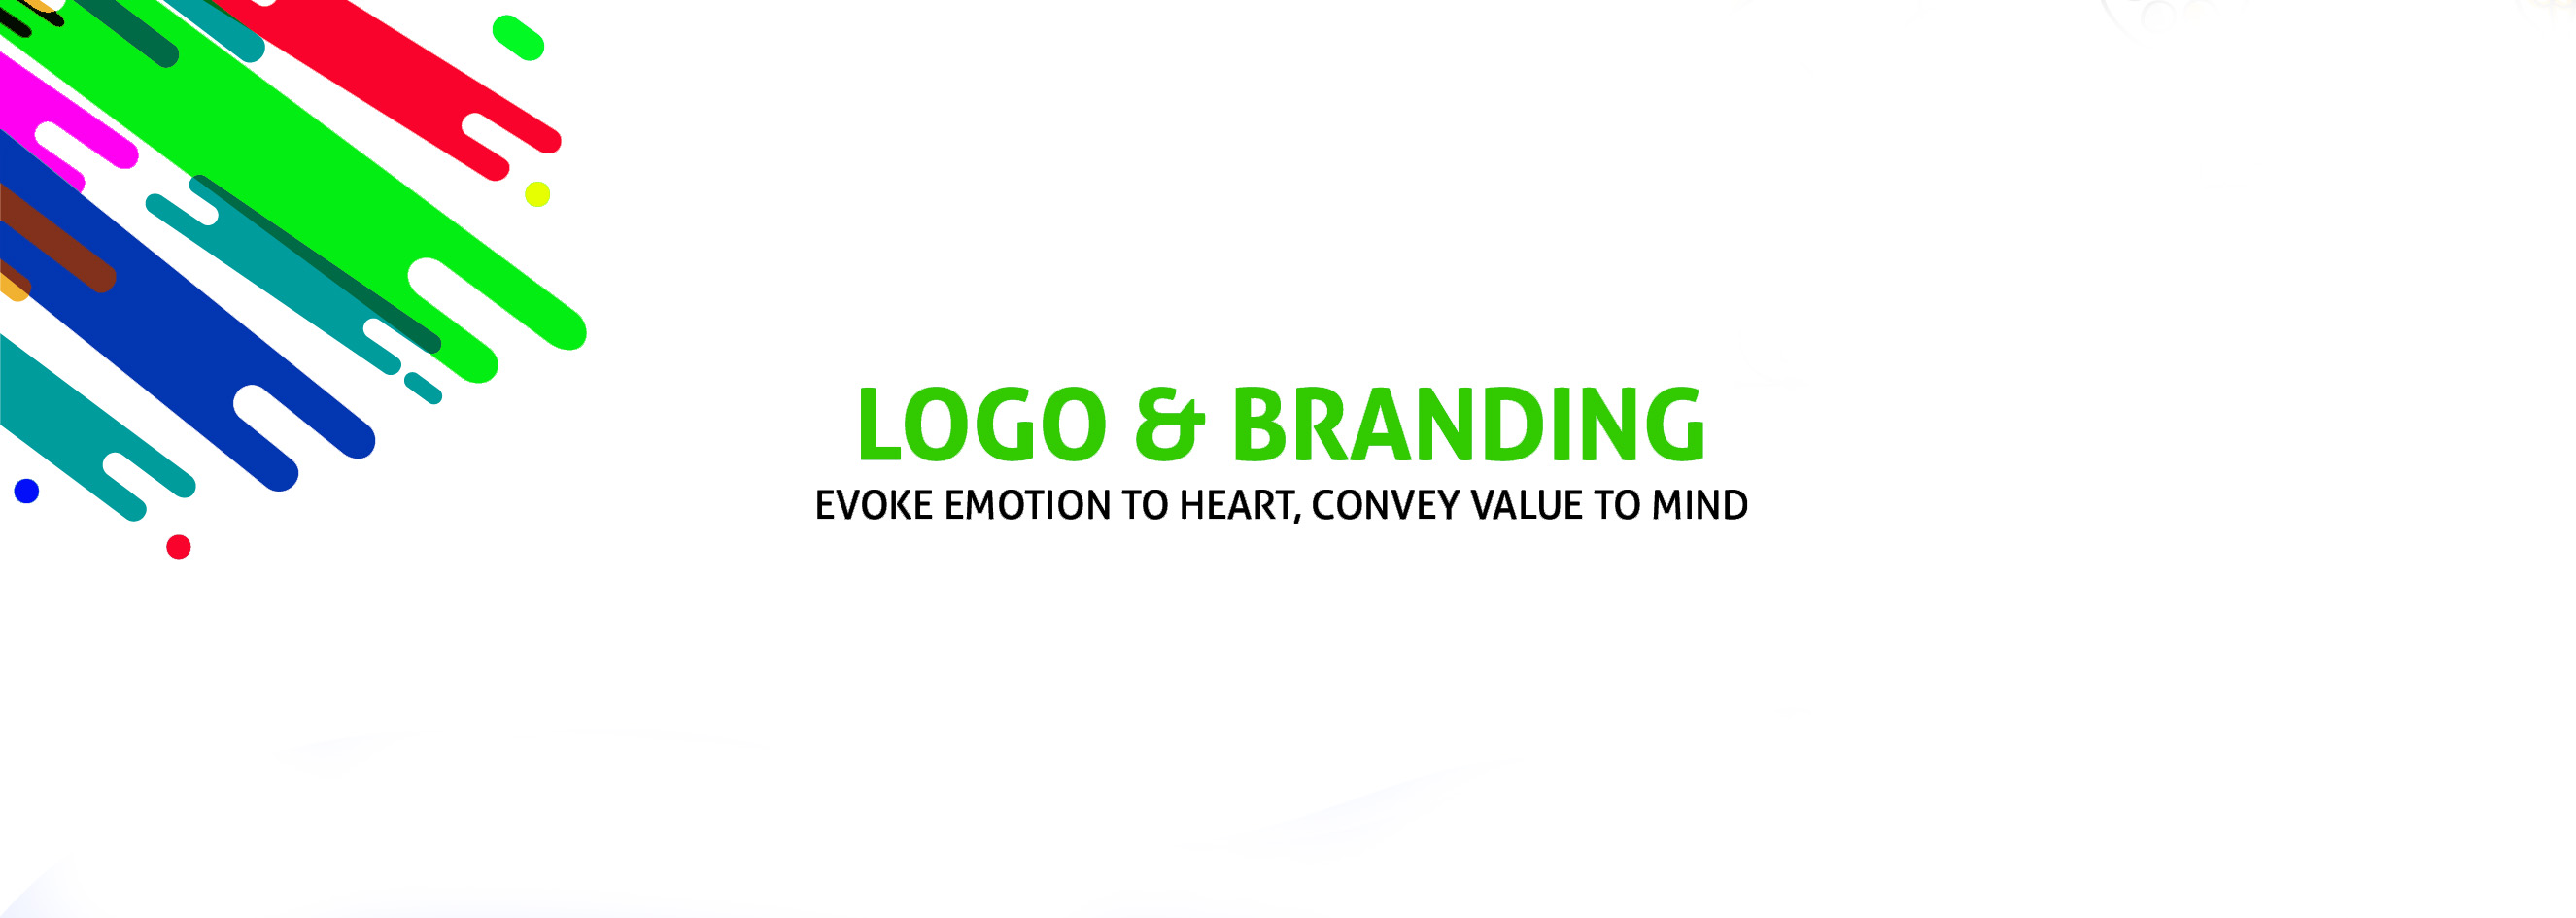 Logo Design Services, business logo design services, branding logo design services, a2a graphic design agency services, logo design services Lebanon